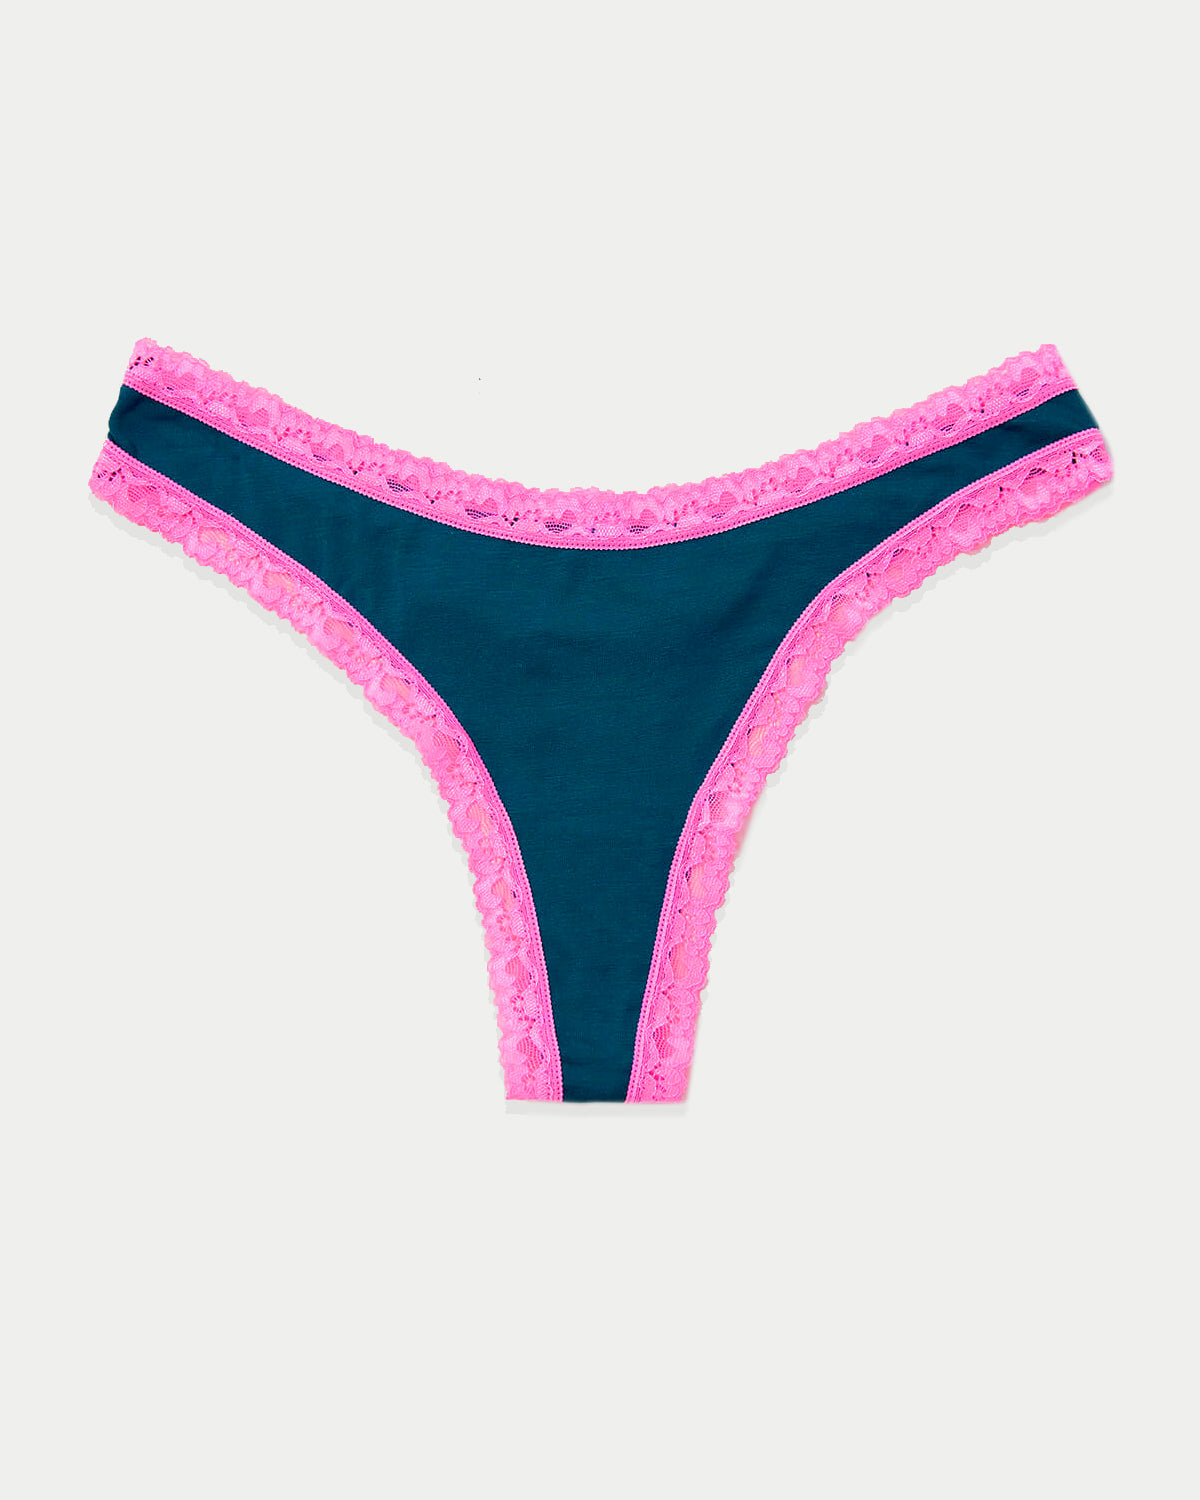 TWIFER Lingerie For Women G String Lingerie Underwear Thong Briefs Ultra  Thin Women Knickers Panties 